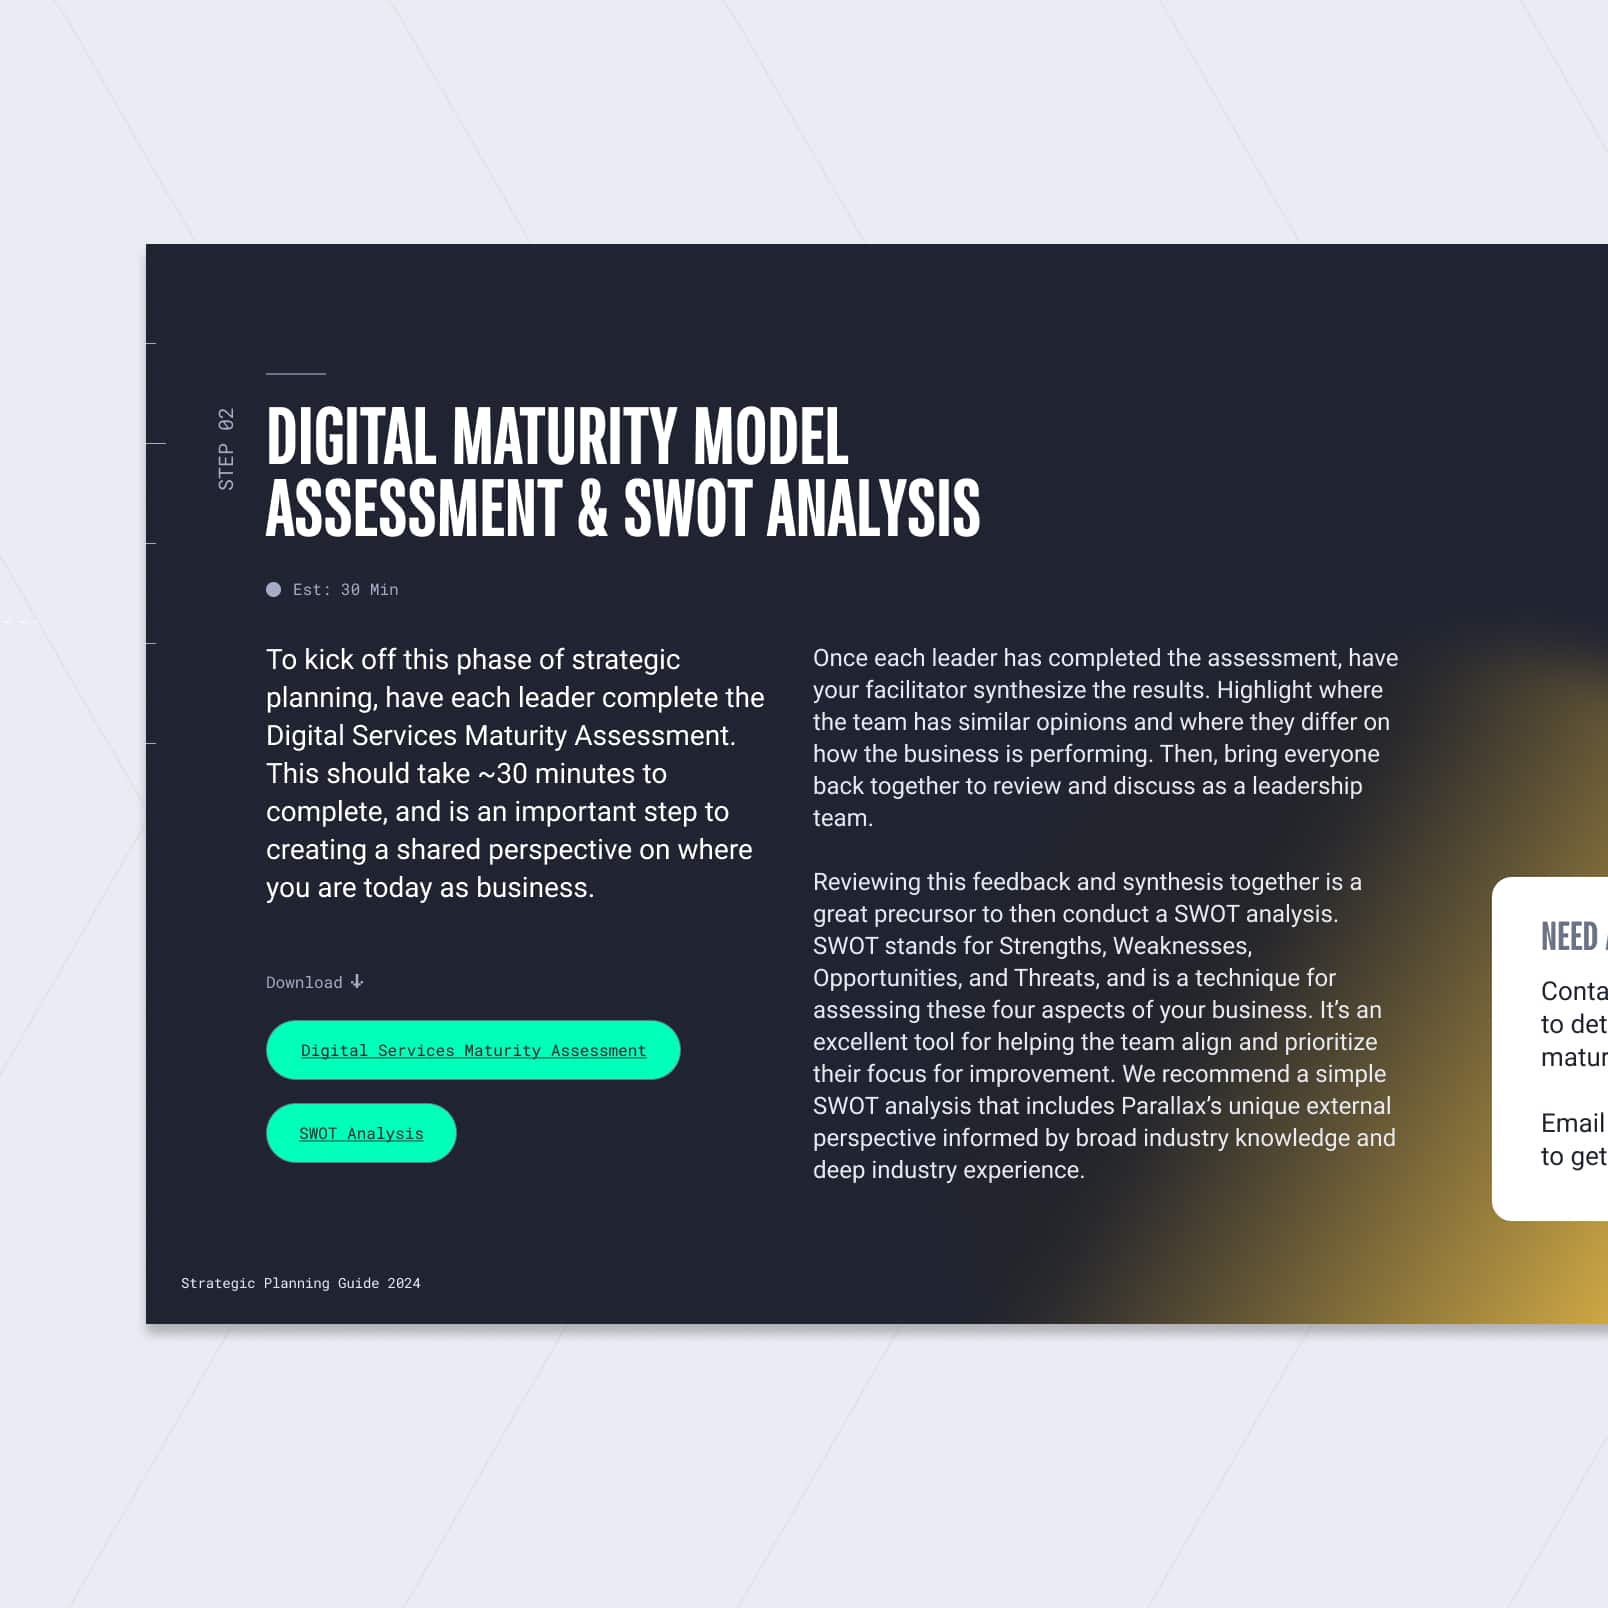 Digital Maturity Model Assessment & Swot Analysis